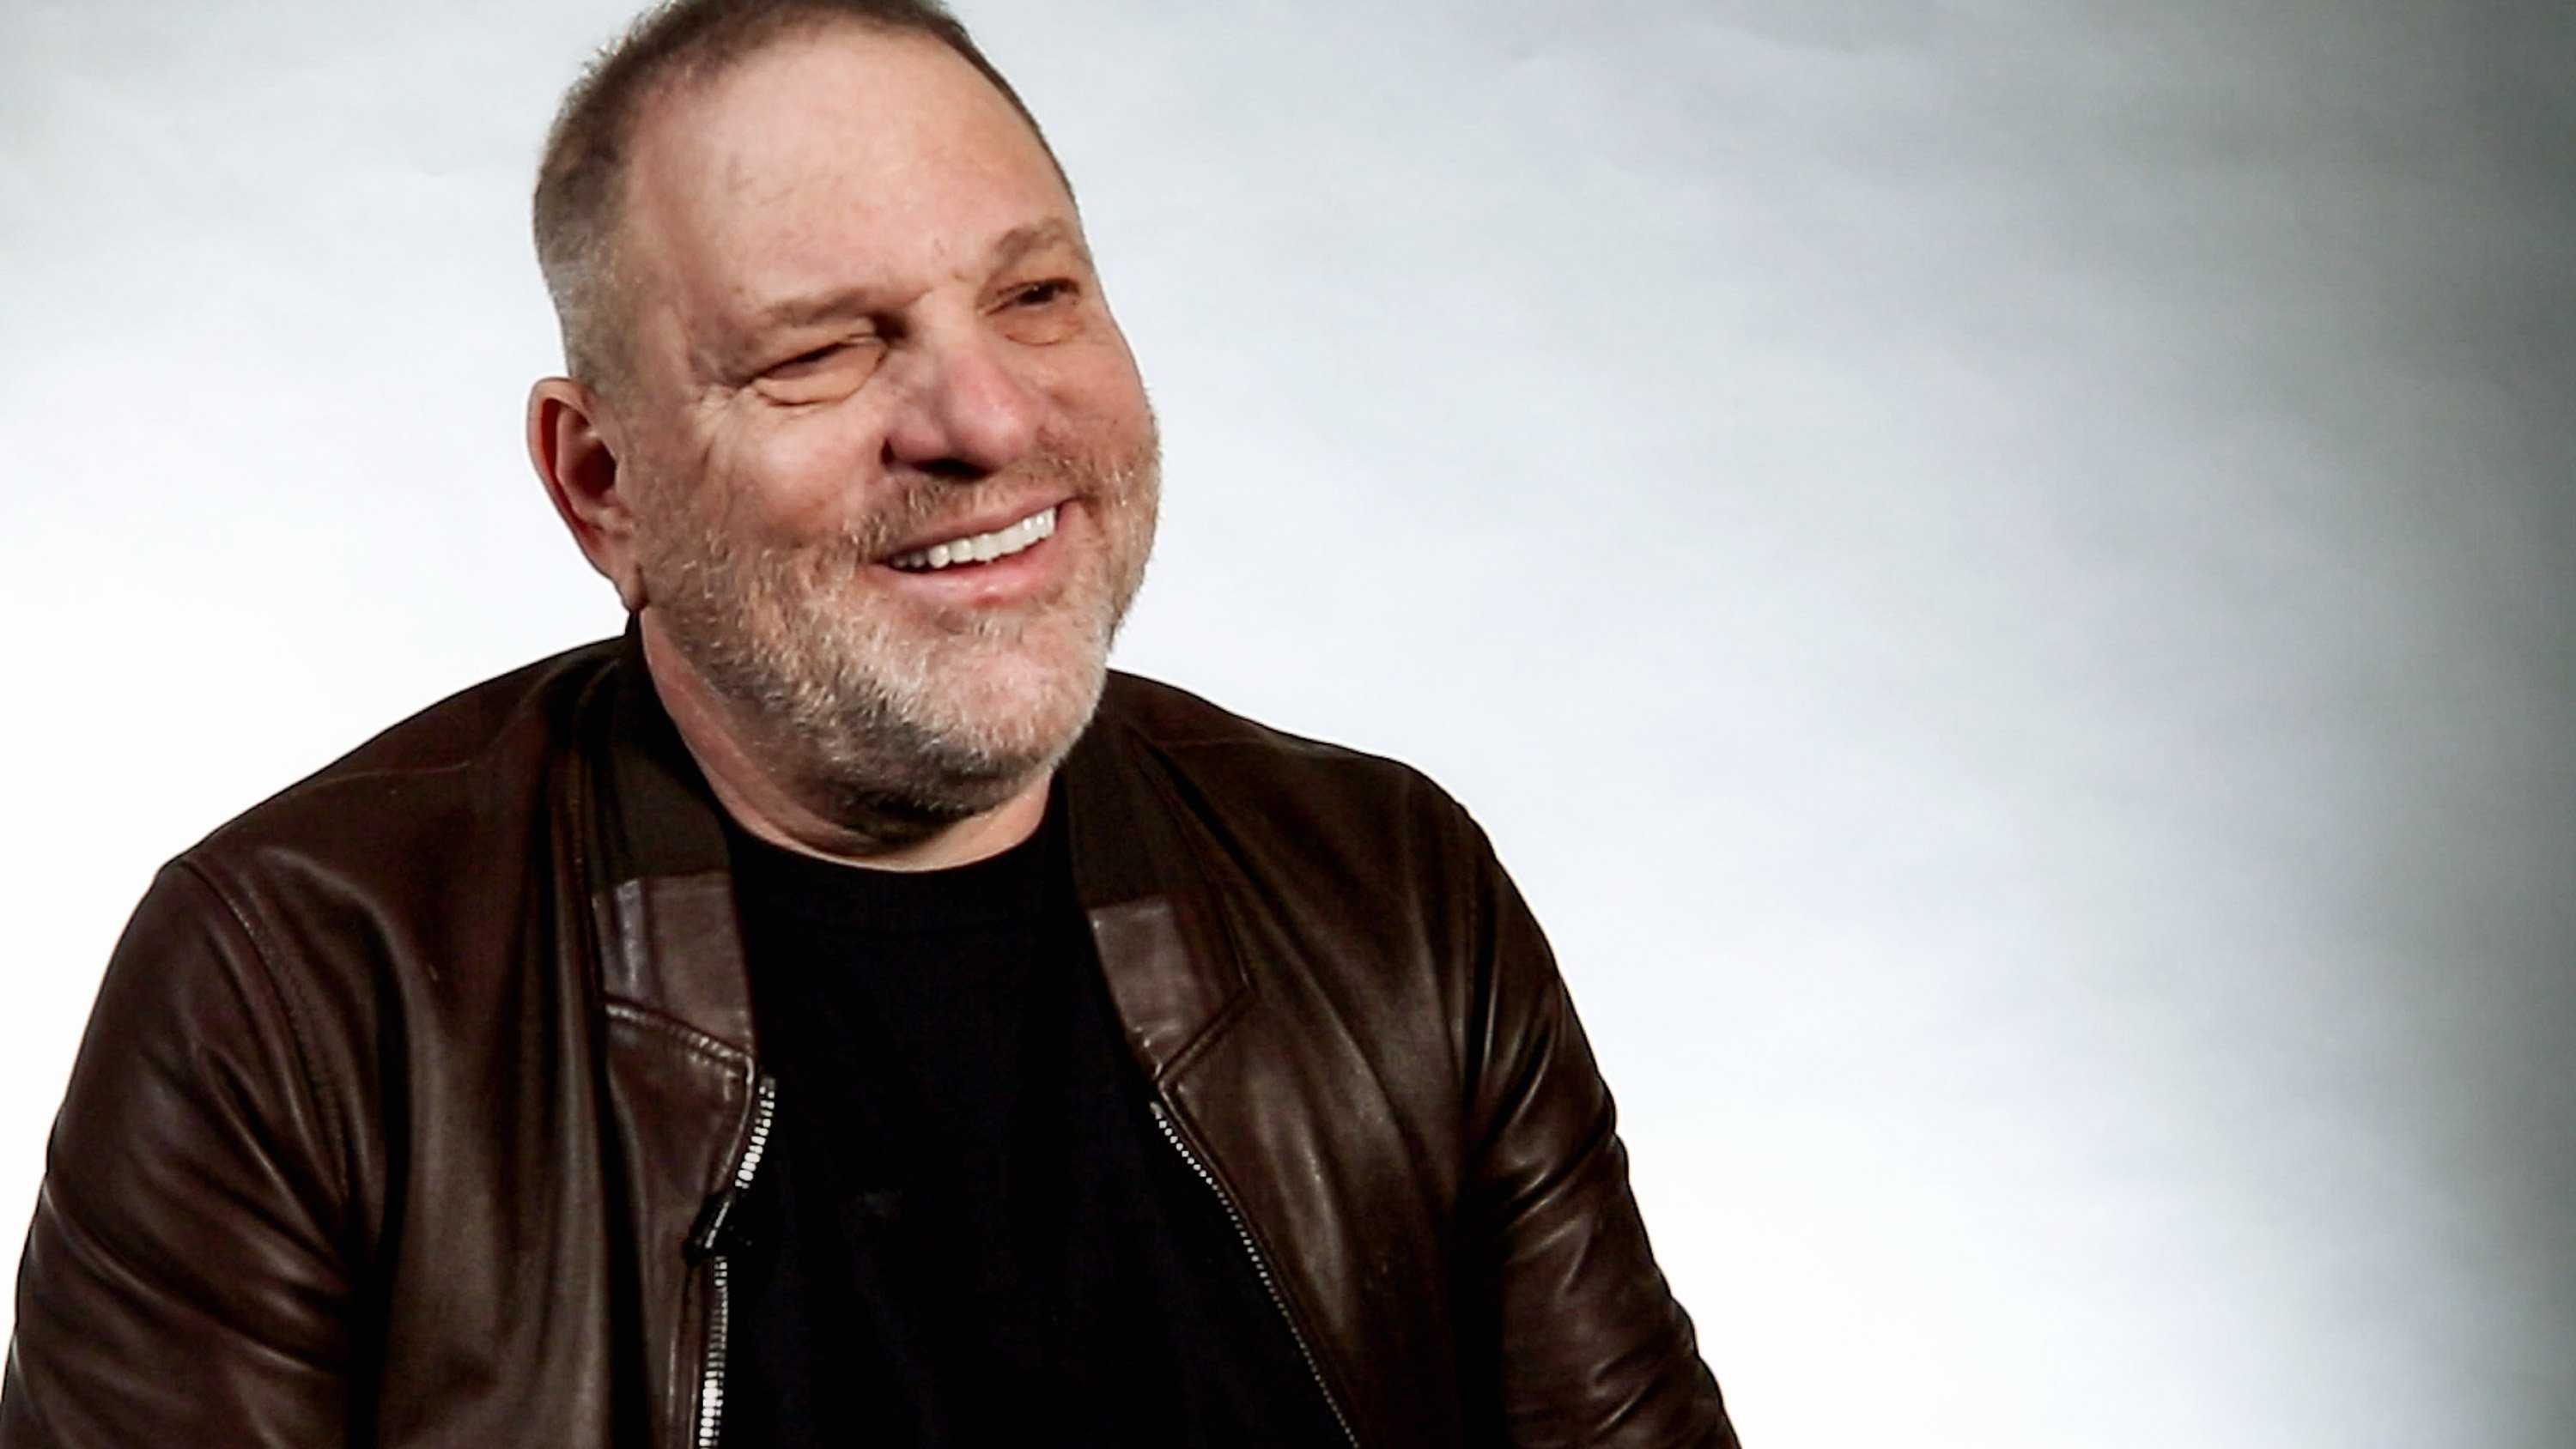 Motion picture academy expels Harvey Weinstein over 'sexually predatory behavior'